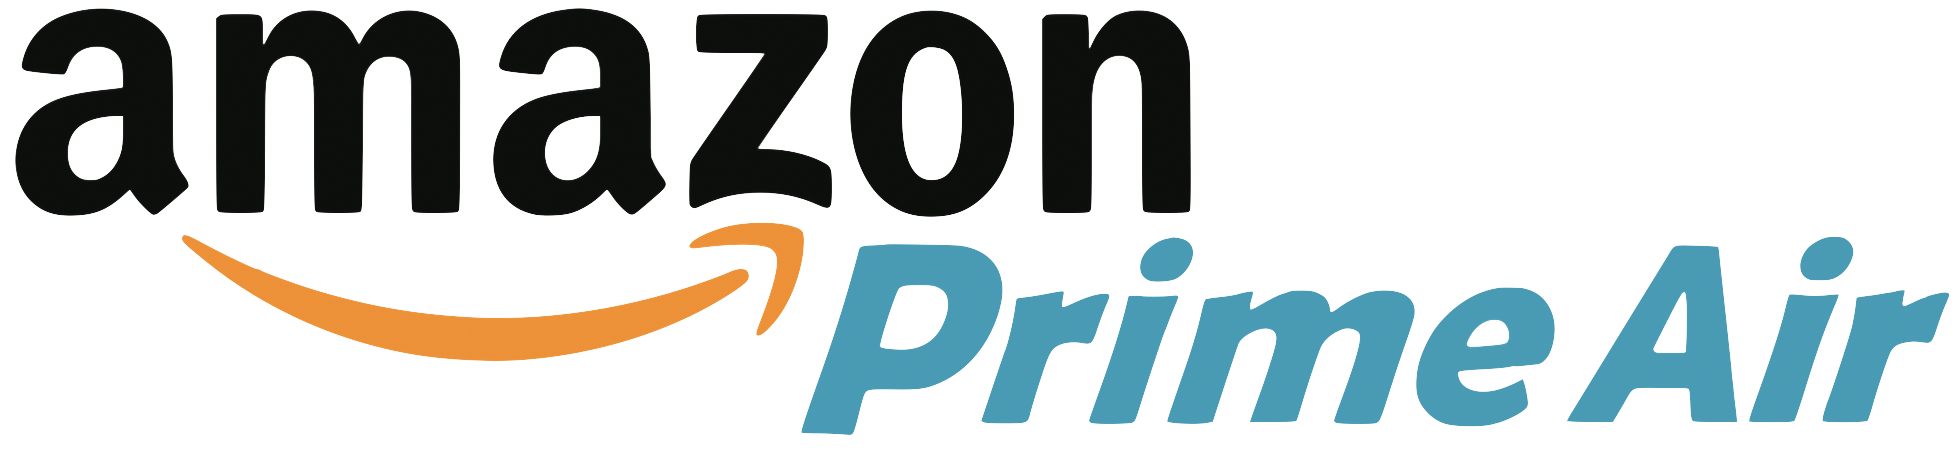 Amazon Prime lidmaatschap PNG Transparant Beeld